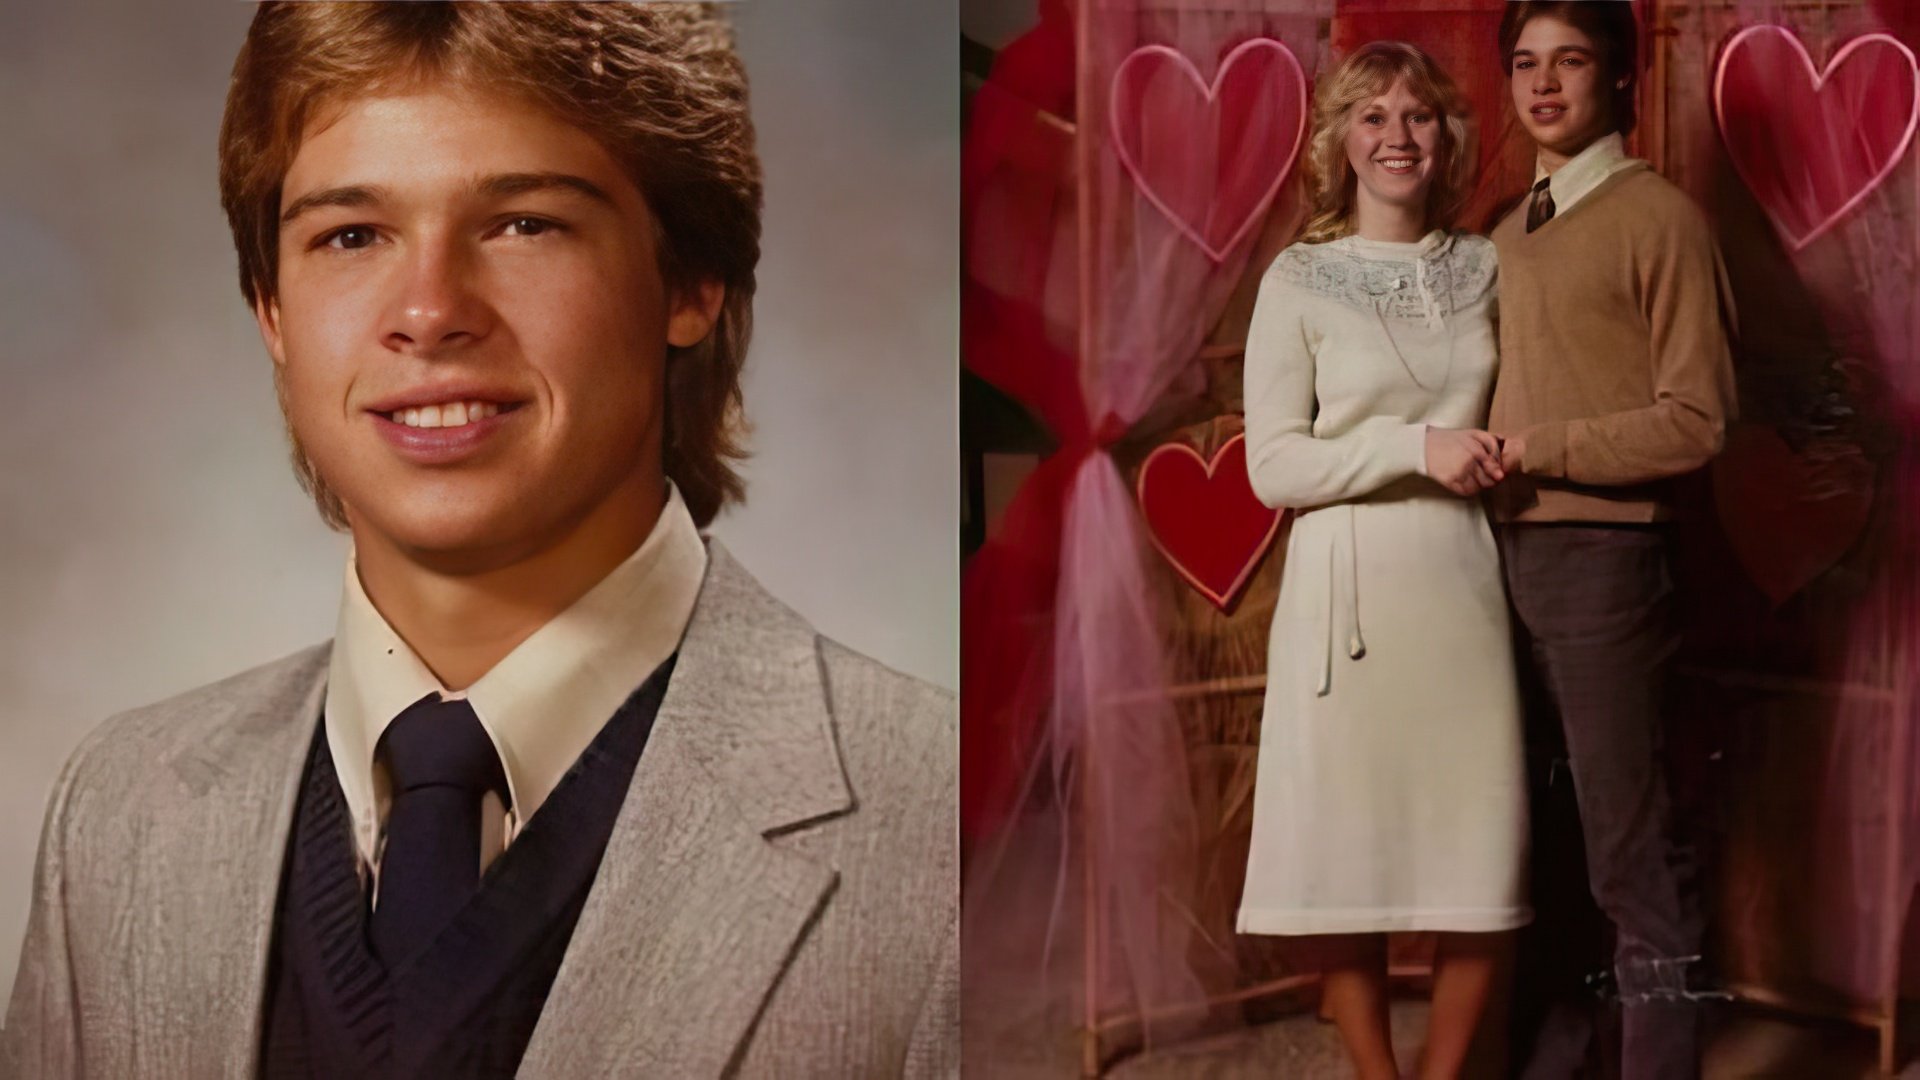 Brad Pitt and his high school sweetheart